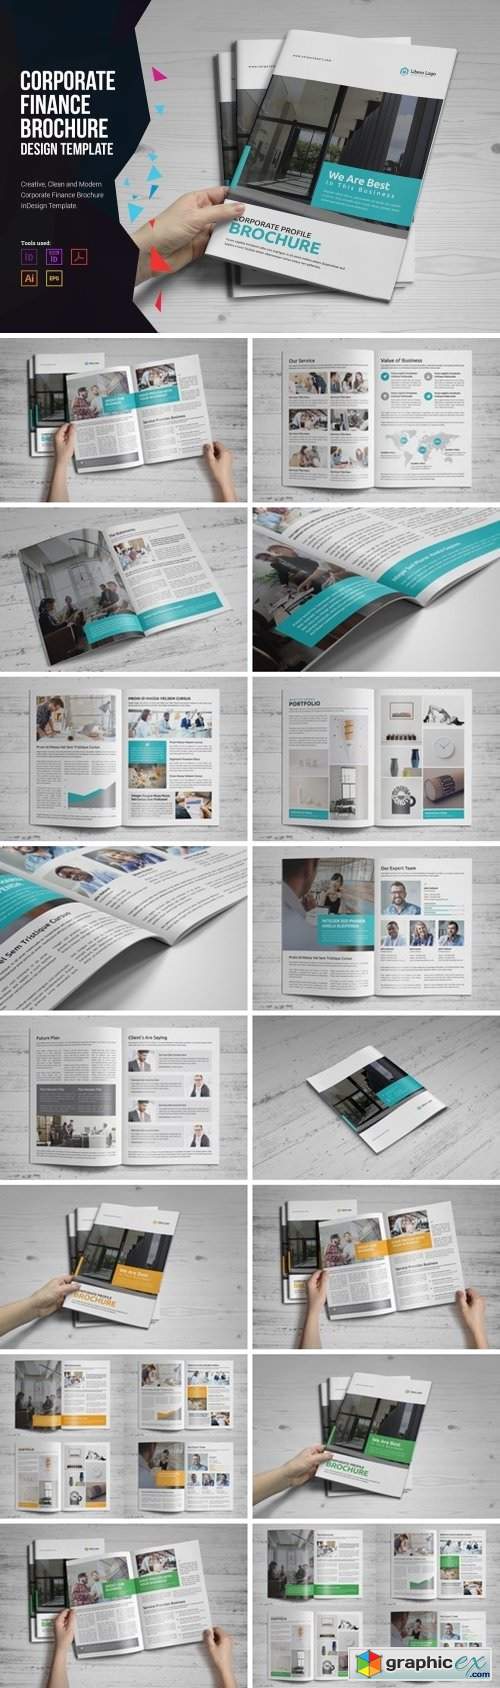 Corporate Brochure Design v2